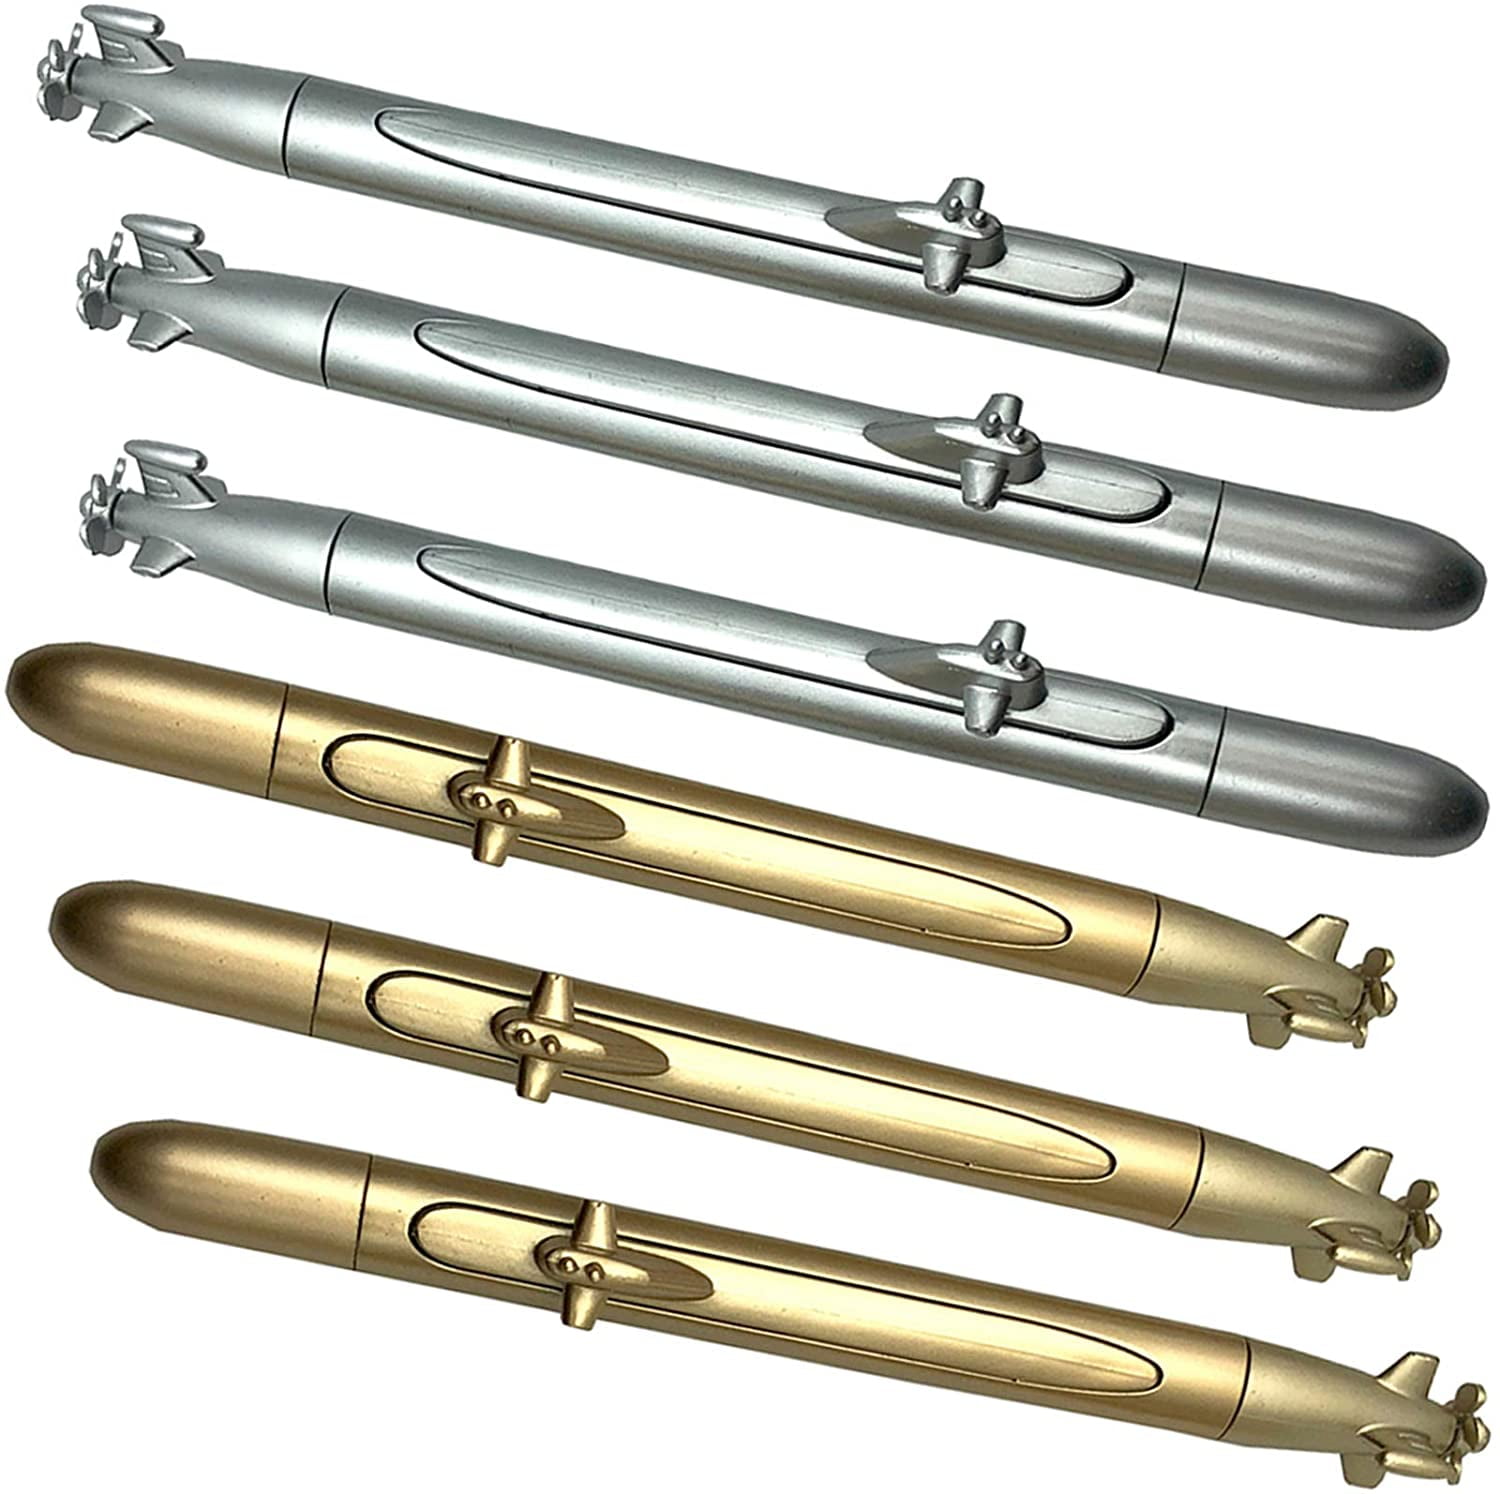 Maydahui 20PCS Submarine Ballpoint Pen Novelty Spacecraft Model Pens